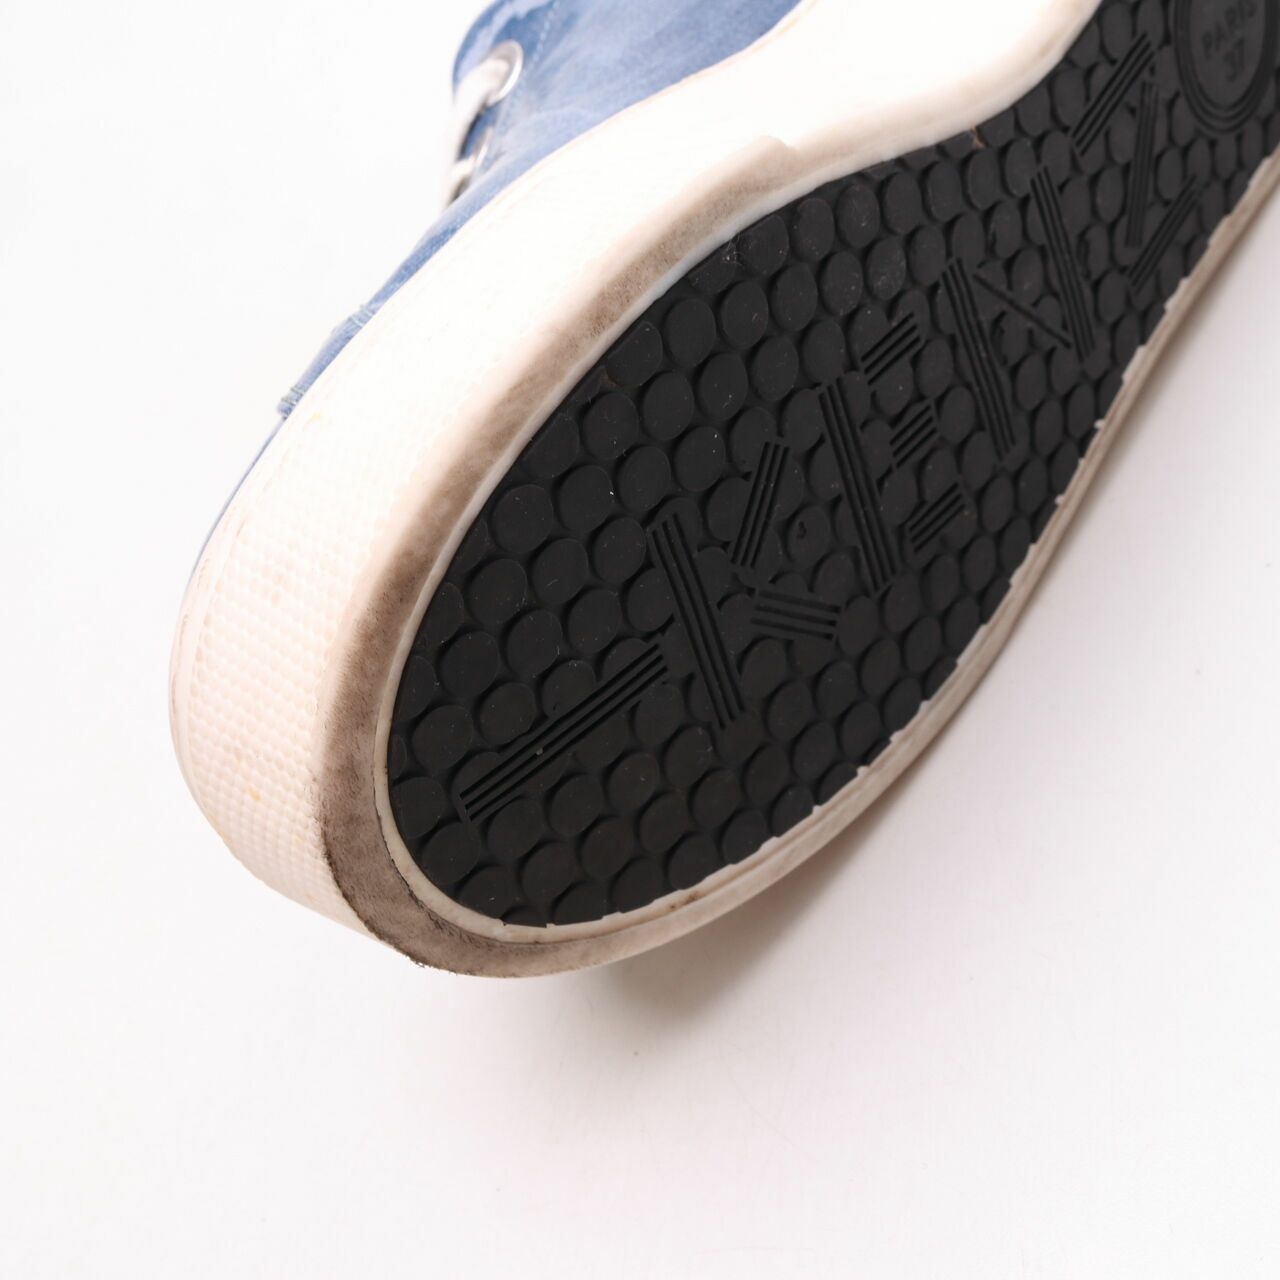 Kenzo Blue Sneakers